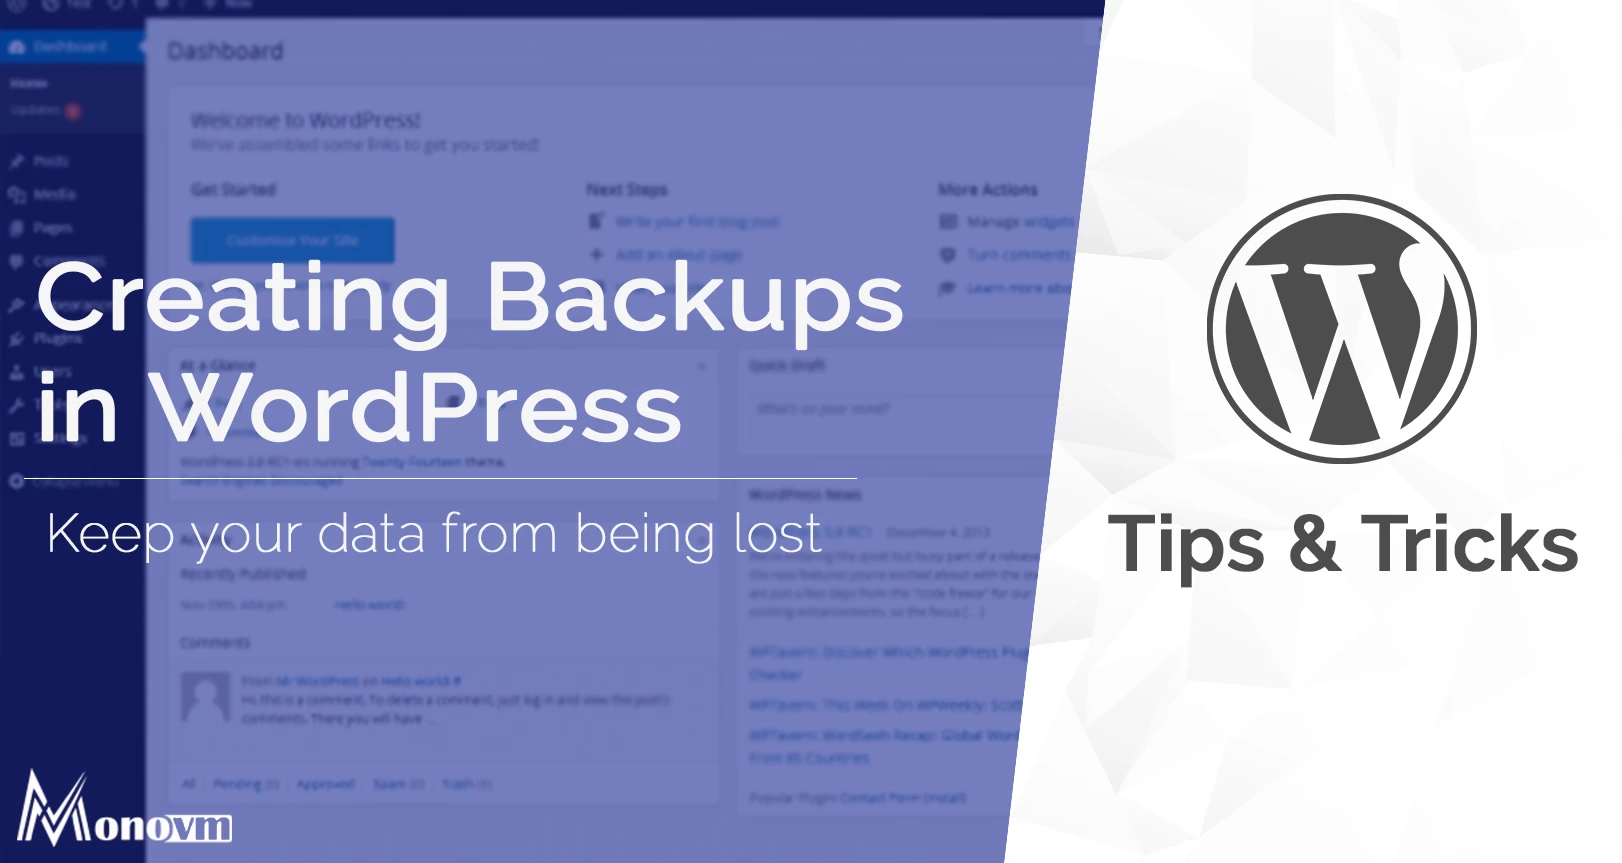 How to Take Backup in WordPress?